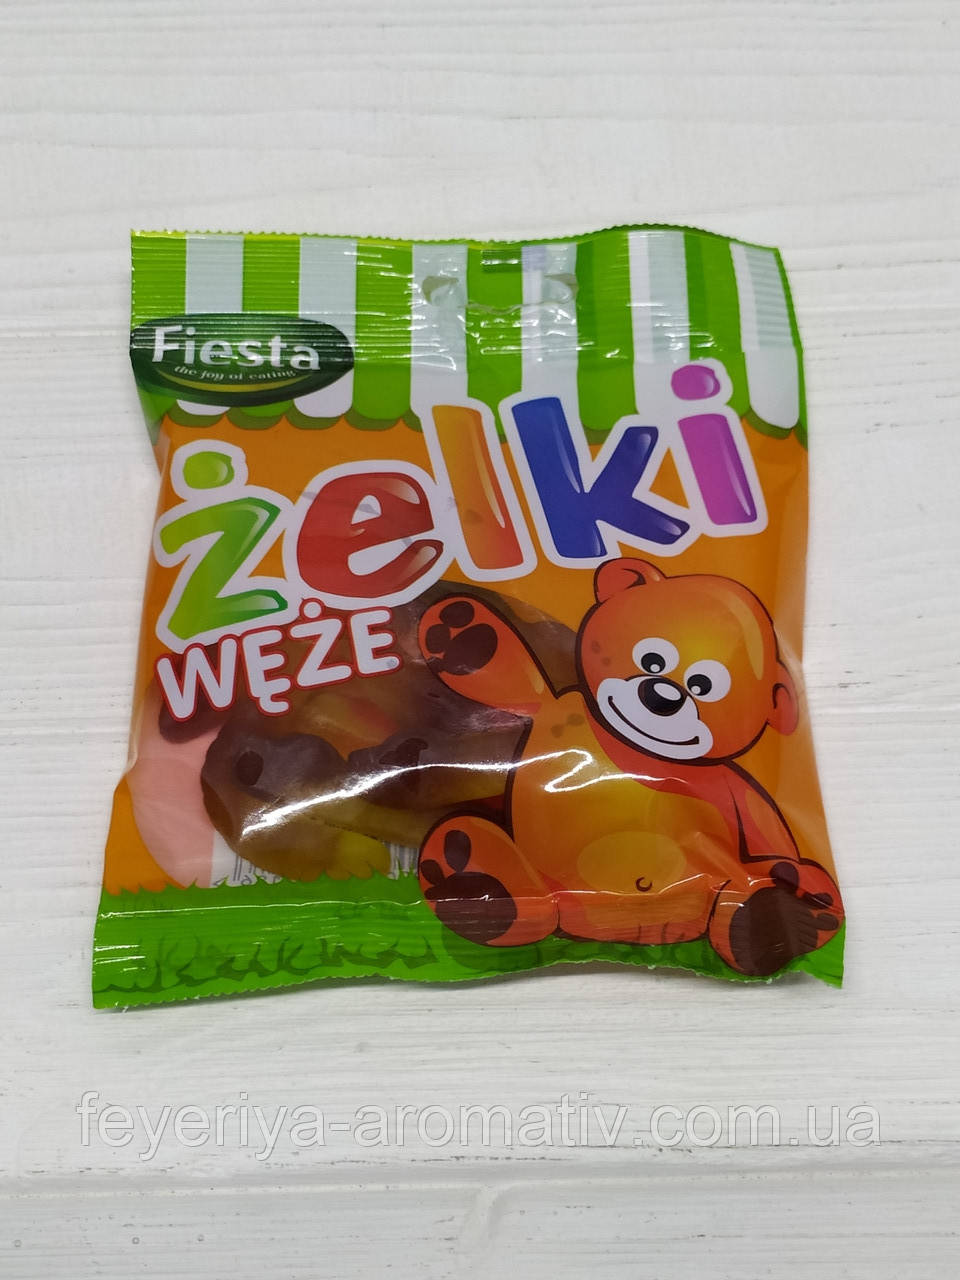 Желейні цукерки Fiesta Zelki Weze 80гр (Польща)